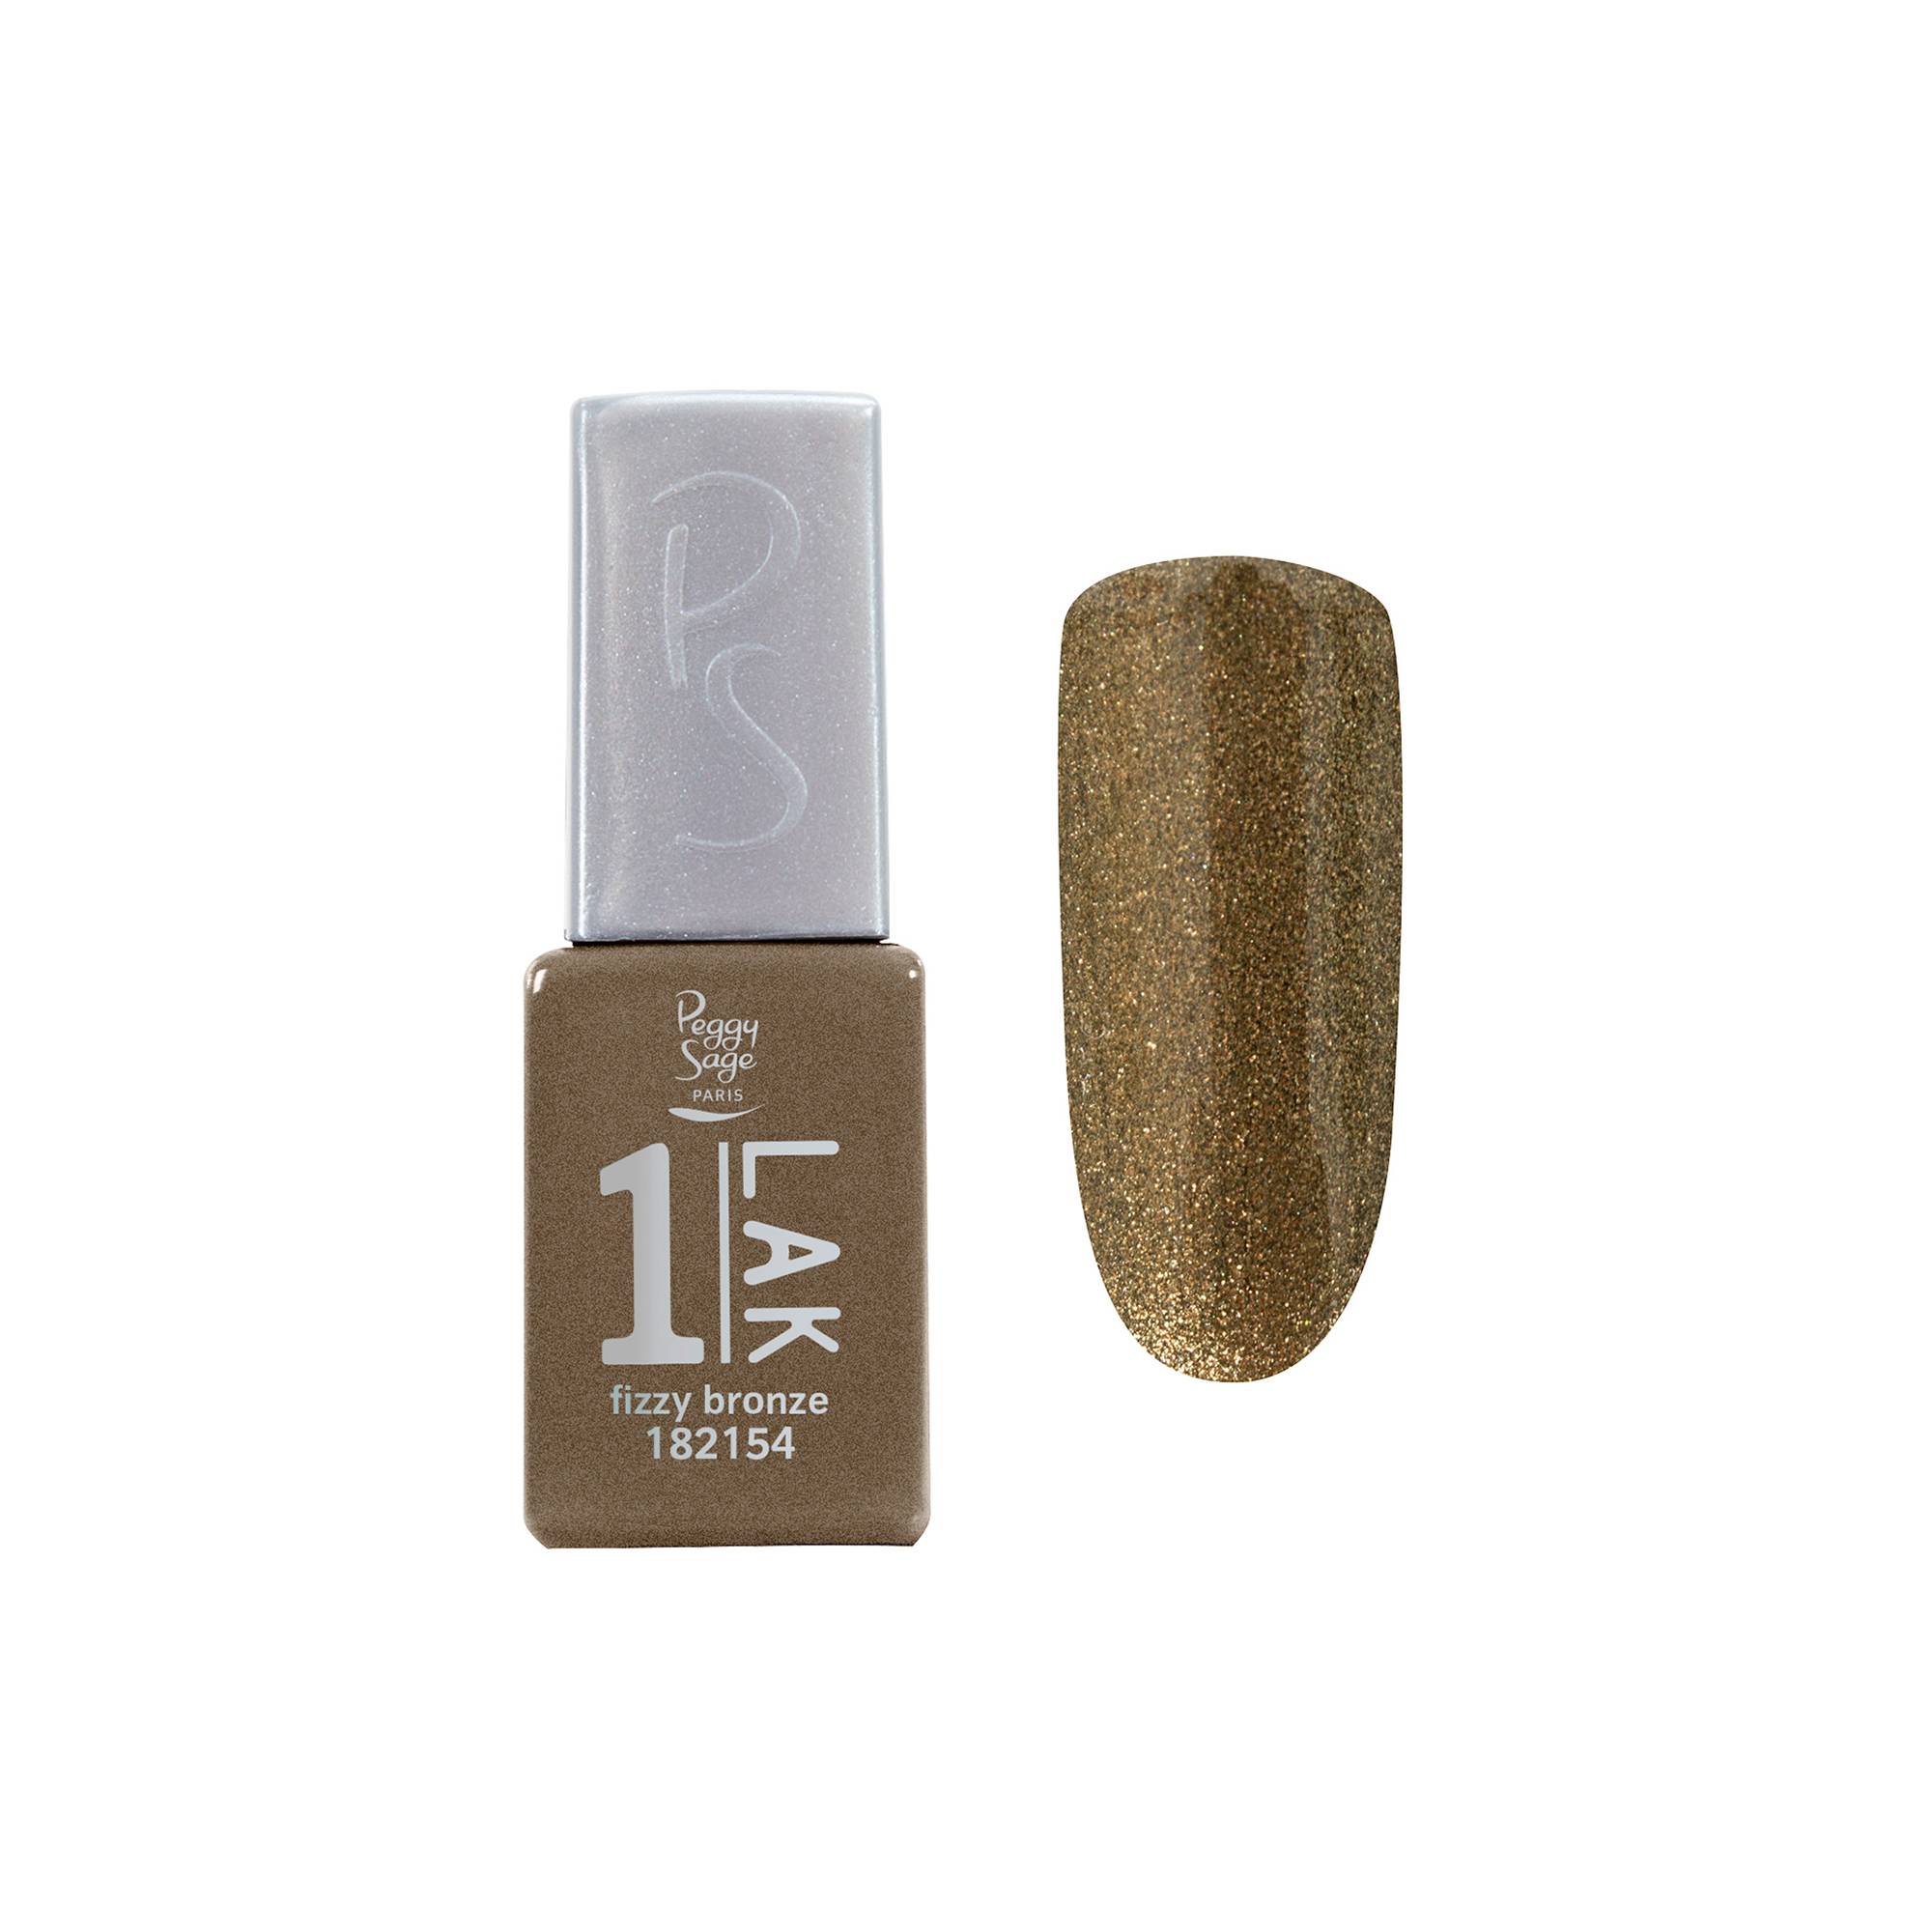 One-LAK 1-step gel polish fizzy bronze del marchio Peggy Sage Capacità 5ml - 1